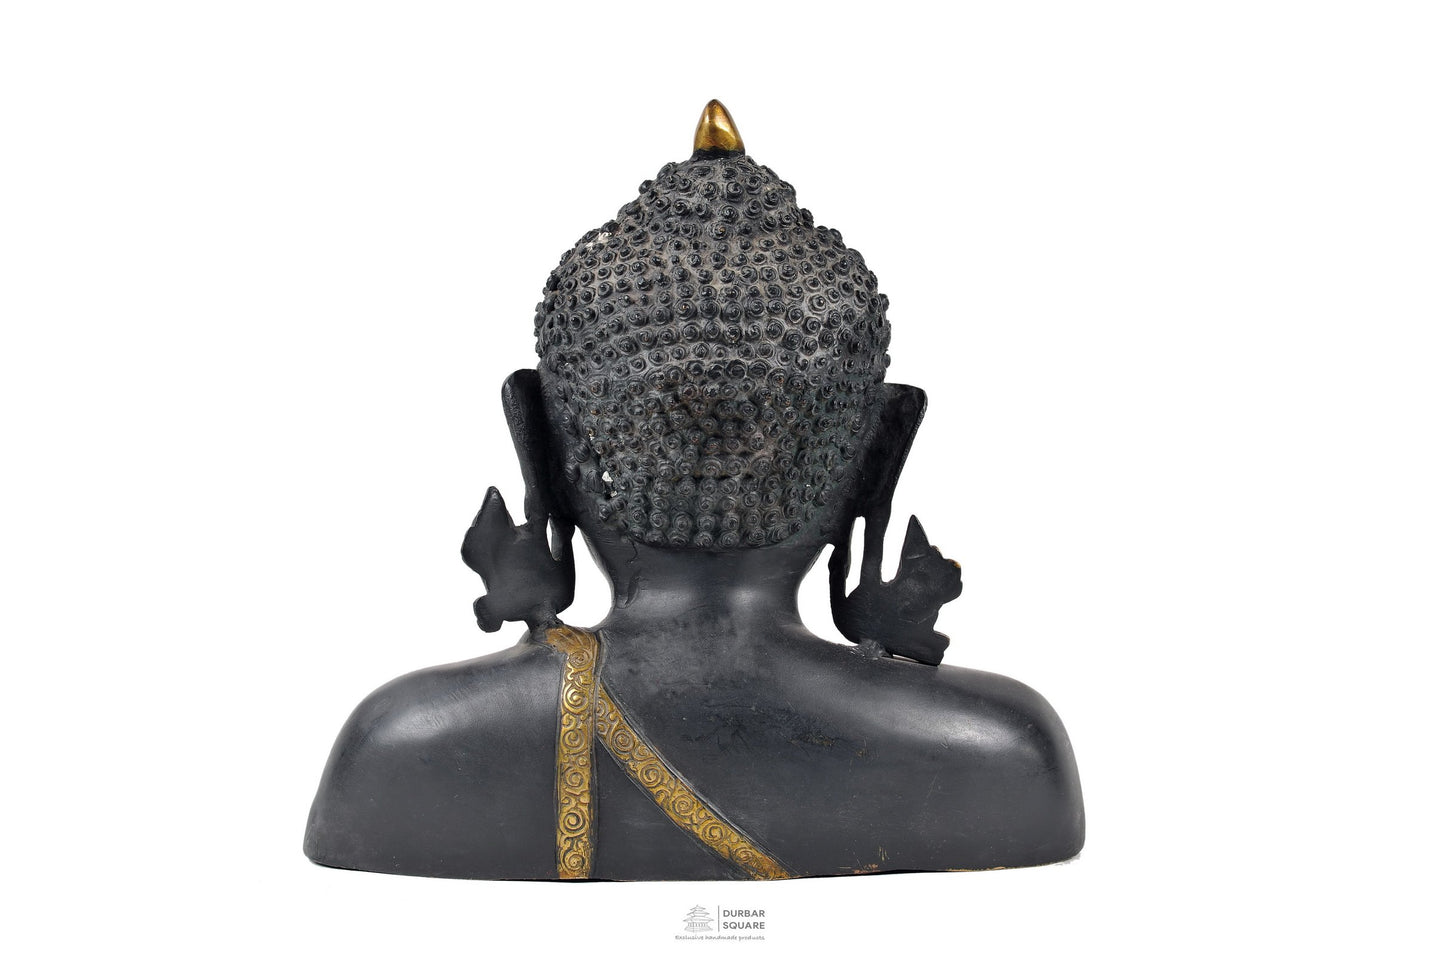 Antique finished Buddha Head